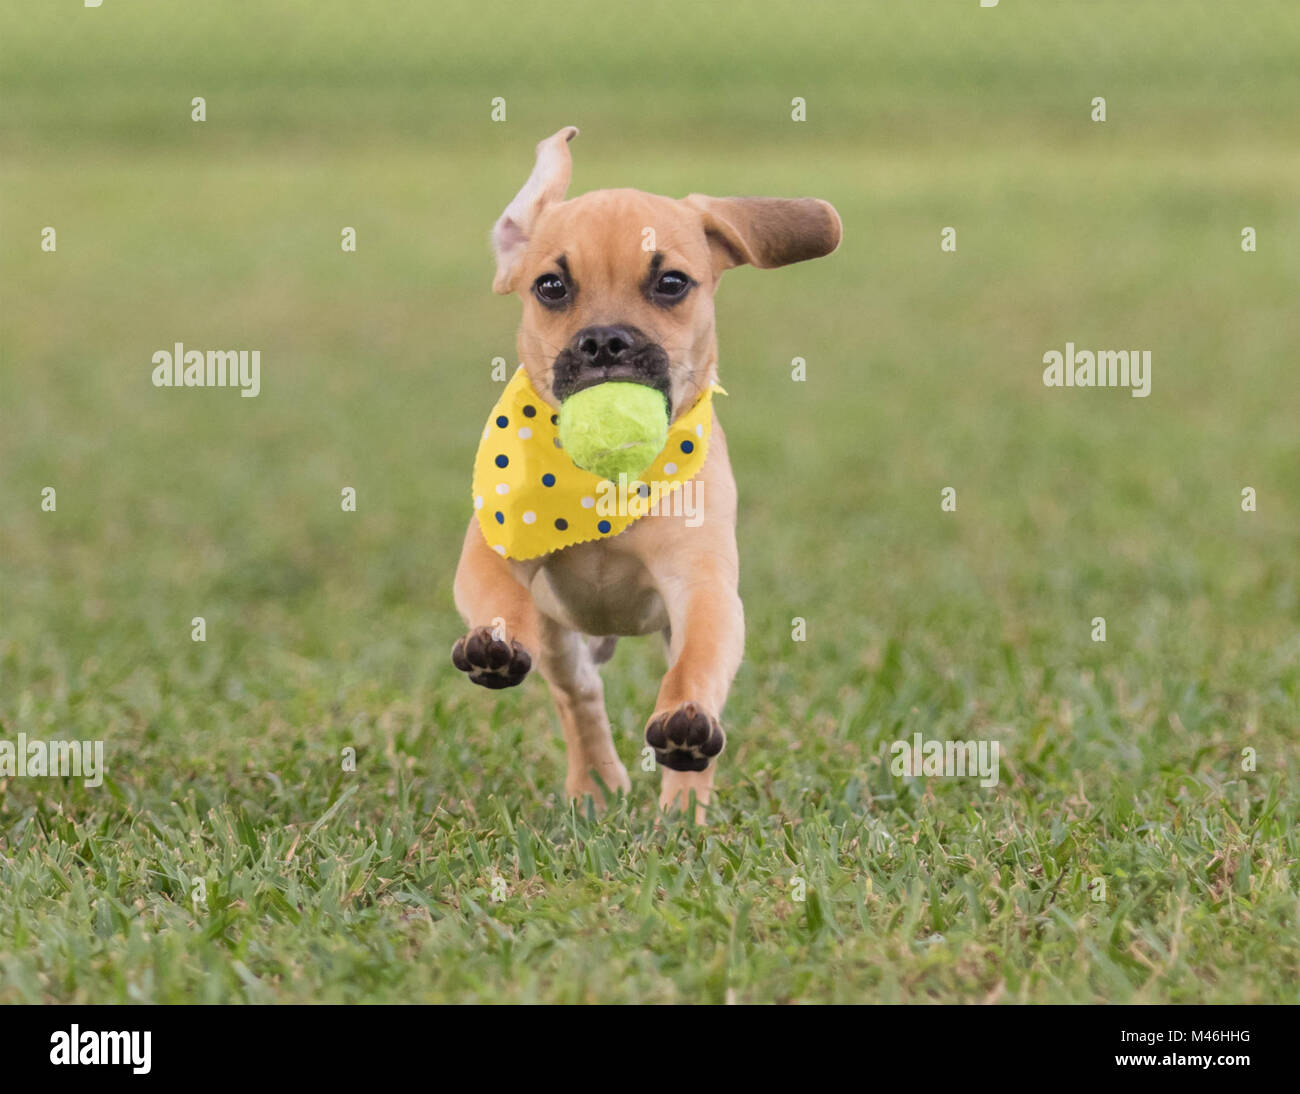 Cute puppy running on grass toward camera with ball in mouth wearing polka dot bandana Stock Photo